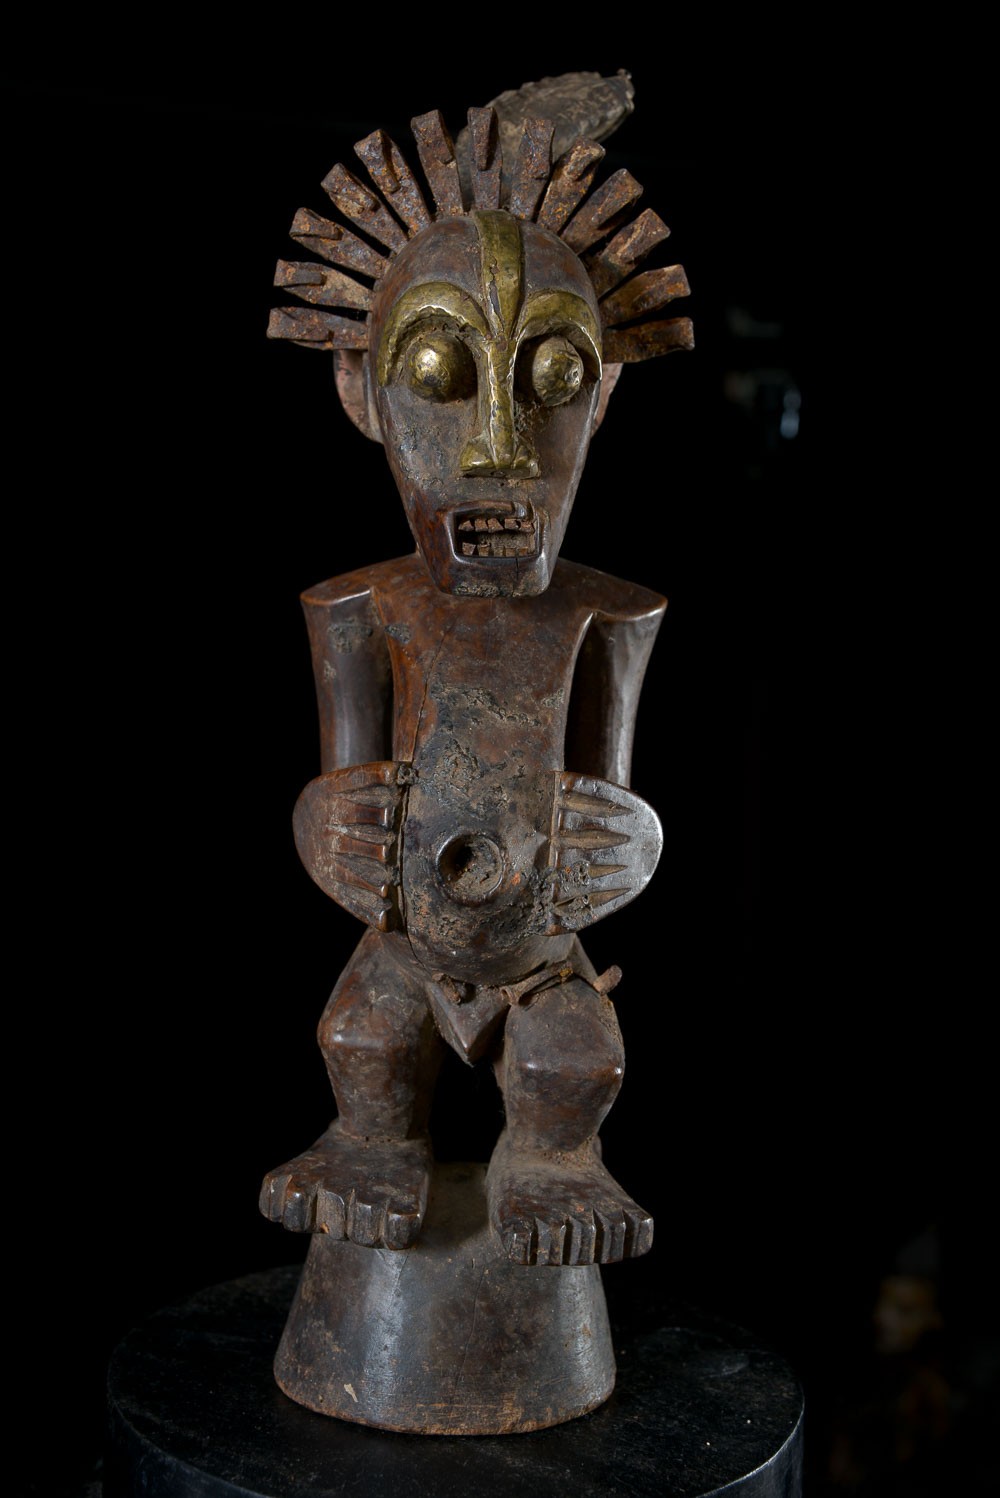 Amulette nkishi de feticheur - Songye - RDC Zaire